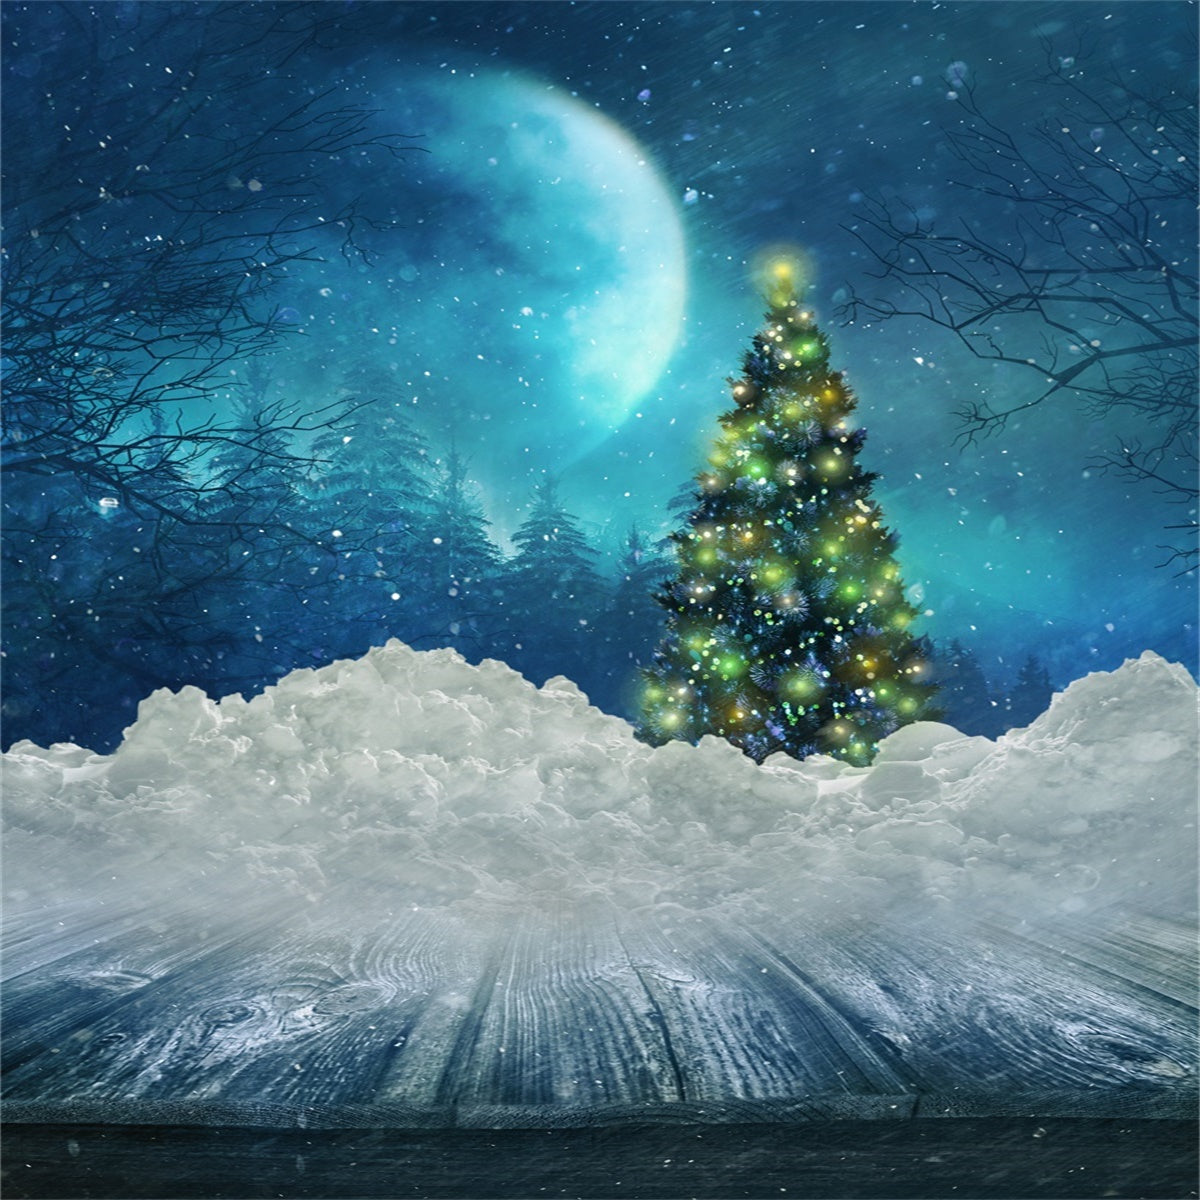 Night of Christmas Tree Snow Photography Backdrops